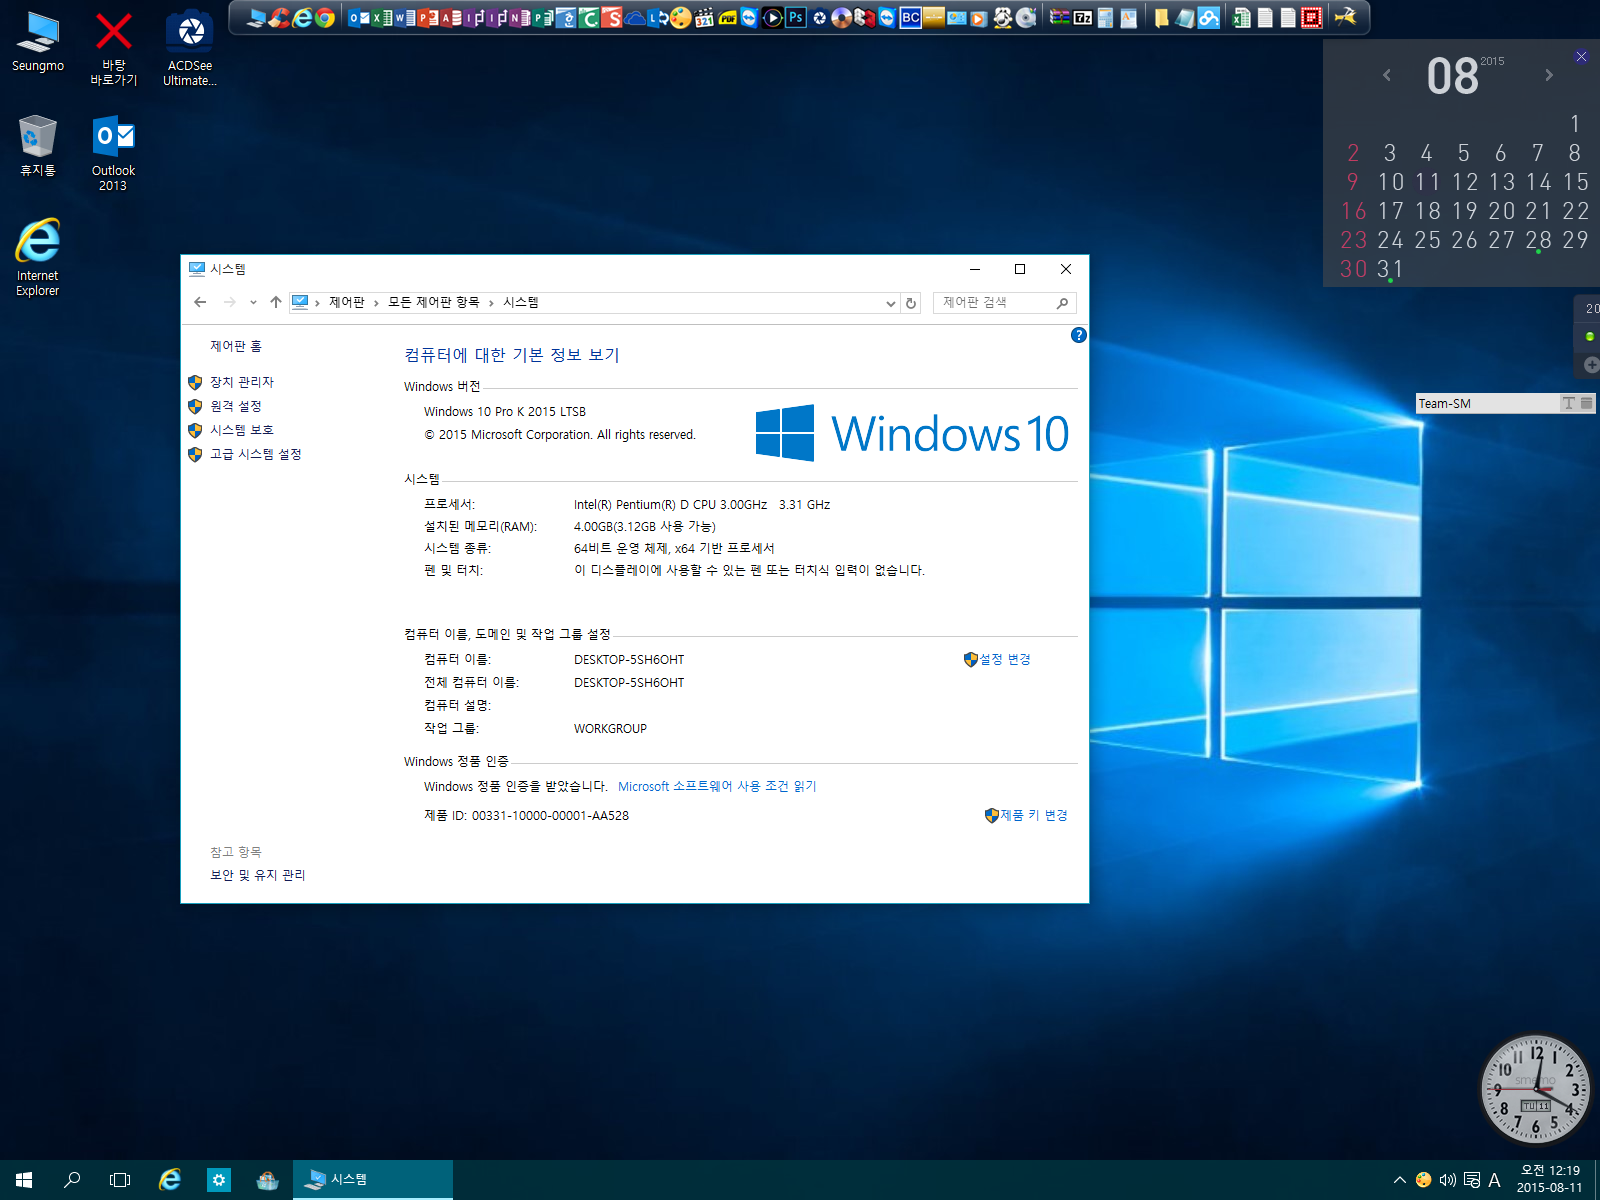 Windows 10 Enterprise 2015 Ltsb X86 Based